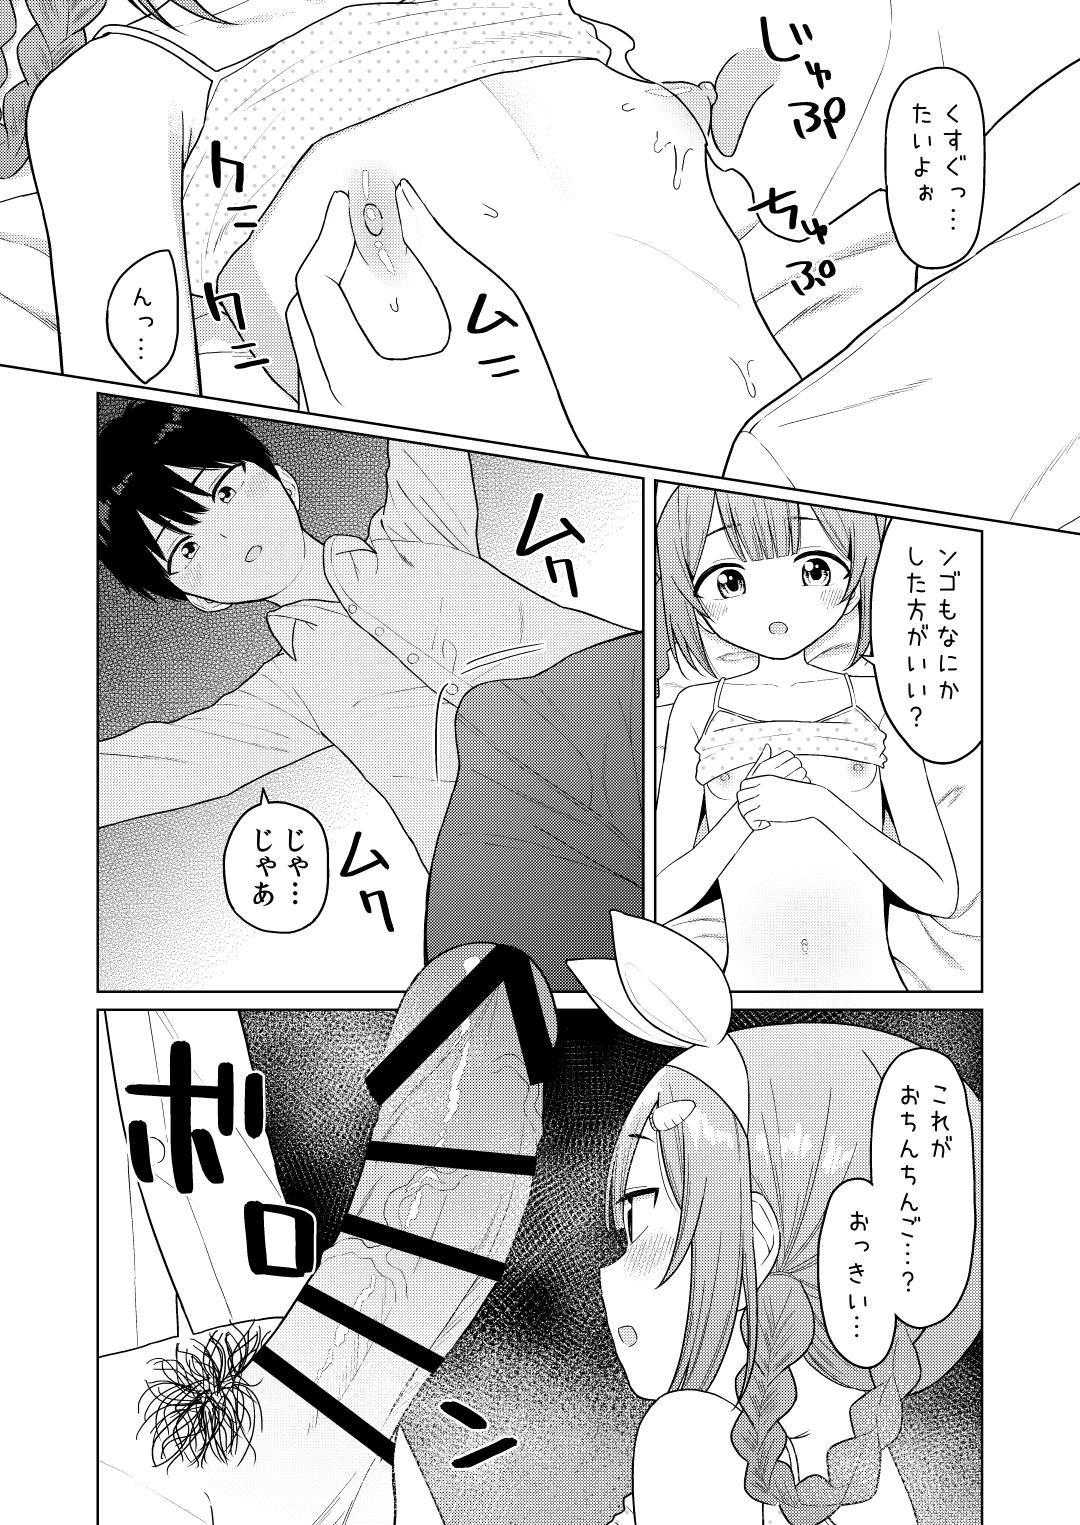 Licking Ippai Shaberu Kimi ga Suki - I love you who talk a lot. - Nijisanji Story - Page 11